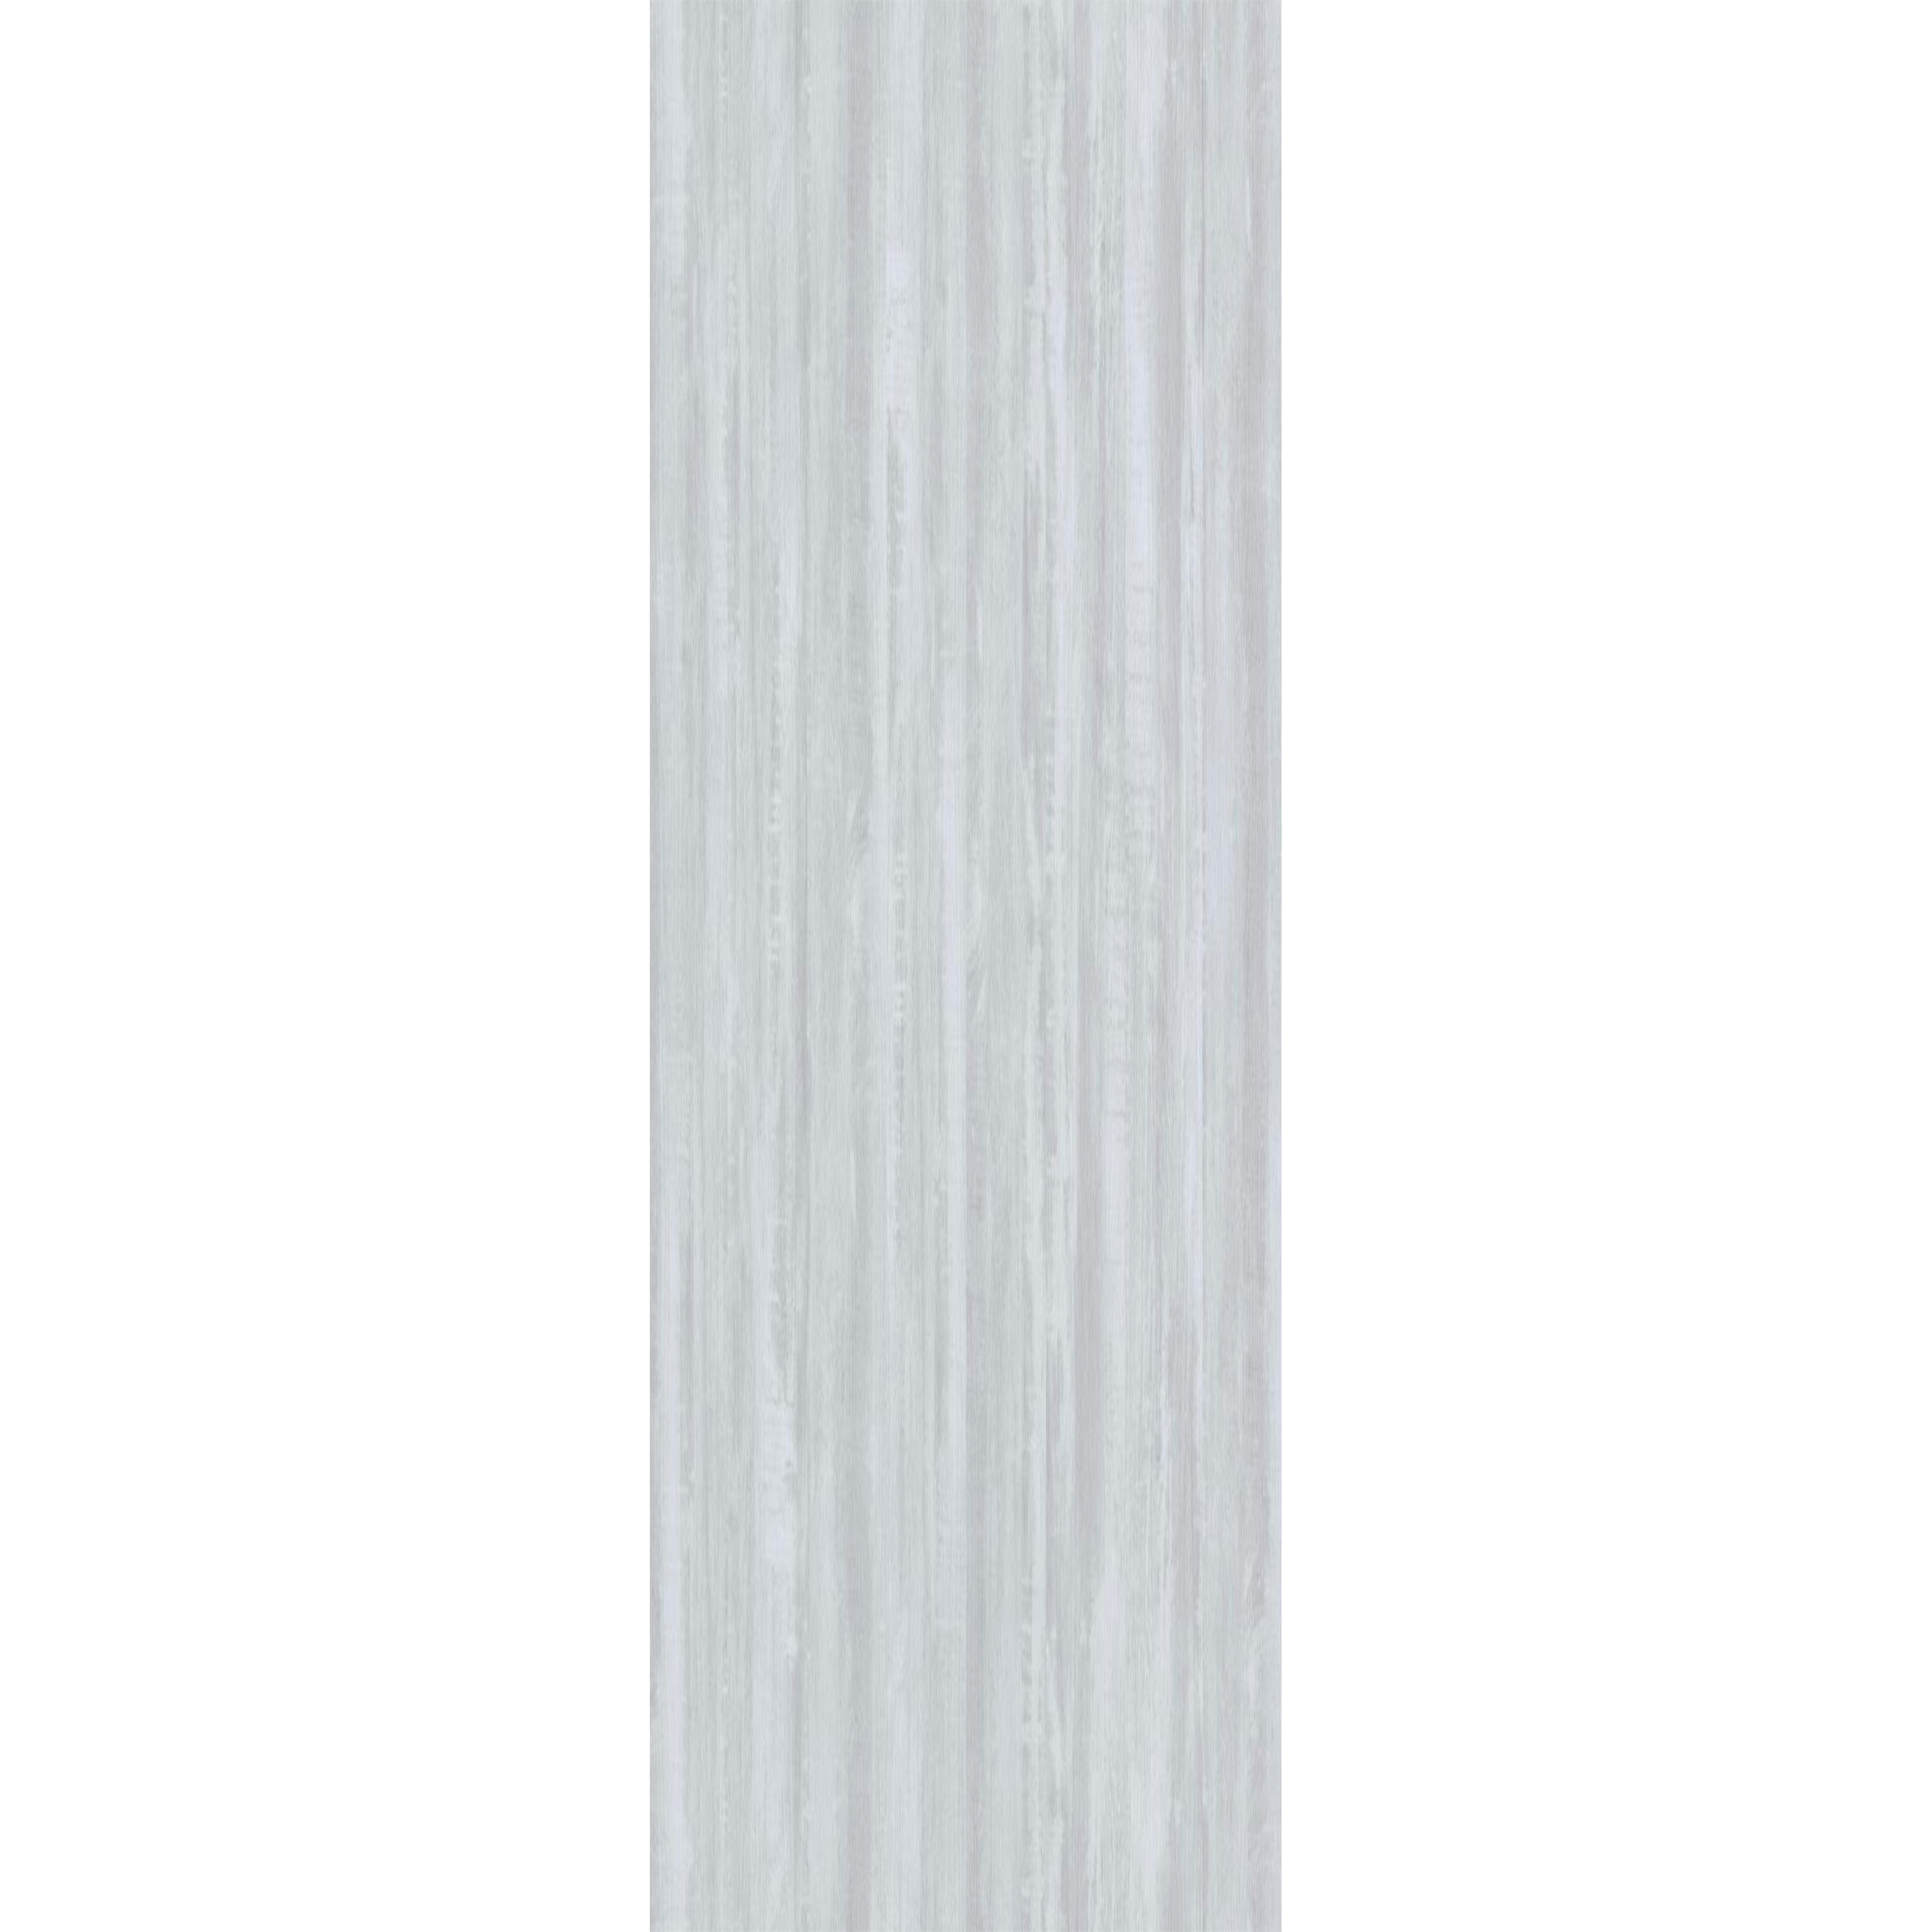 Vinyl Golvplattor Klicksystem Snowwood Vit 17,2x121cm